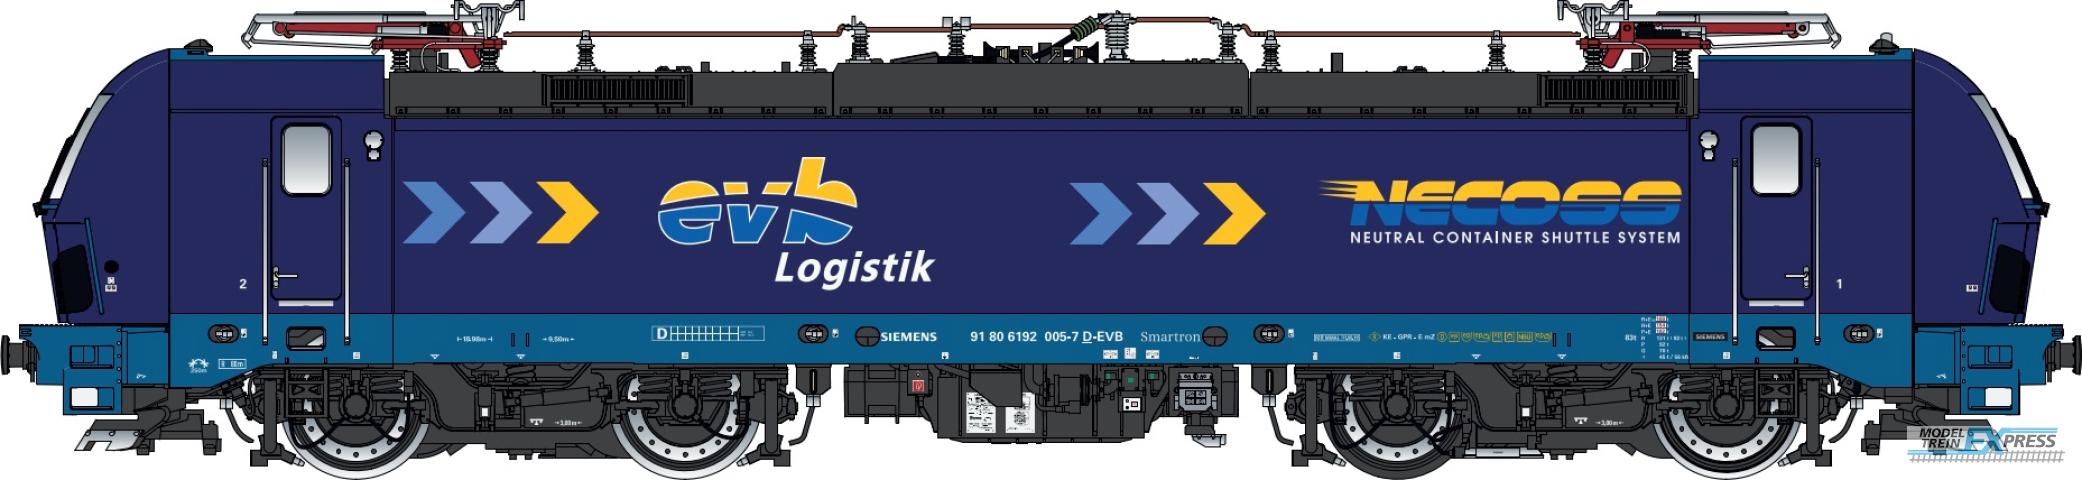 LS Models 16152S Smartron, Eisenbahnen und Verkehrsbetriebe Elbe-Weser (EVB Logistik)  /  Ep. VI  /  ---  /  HO  /  DC SOUND  /  1 P.